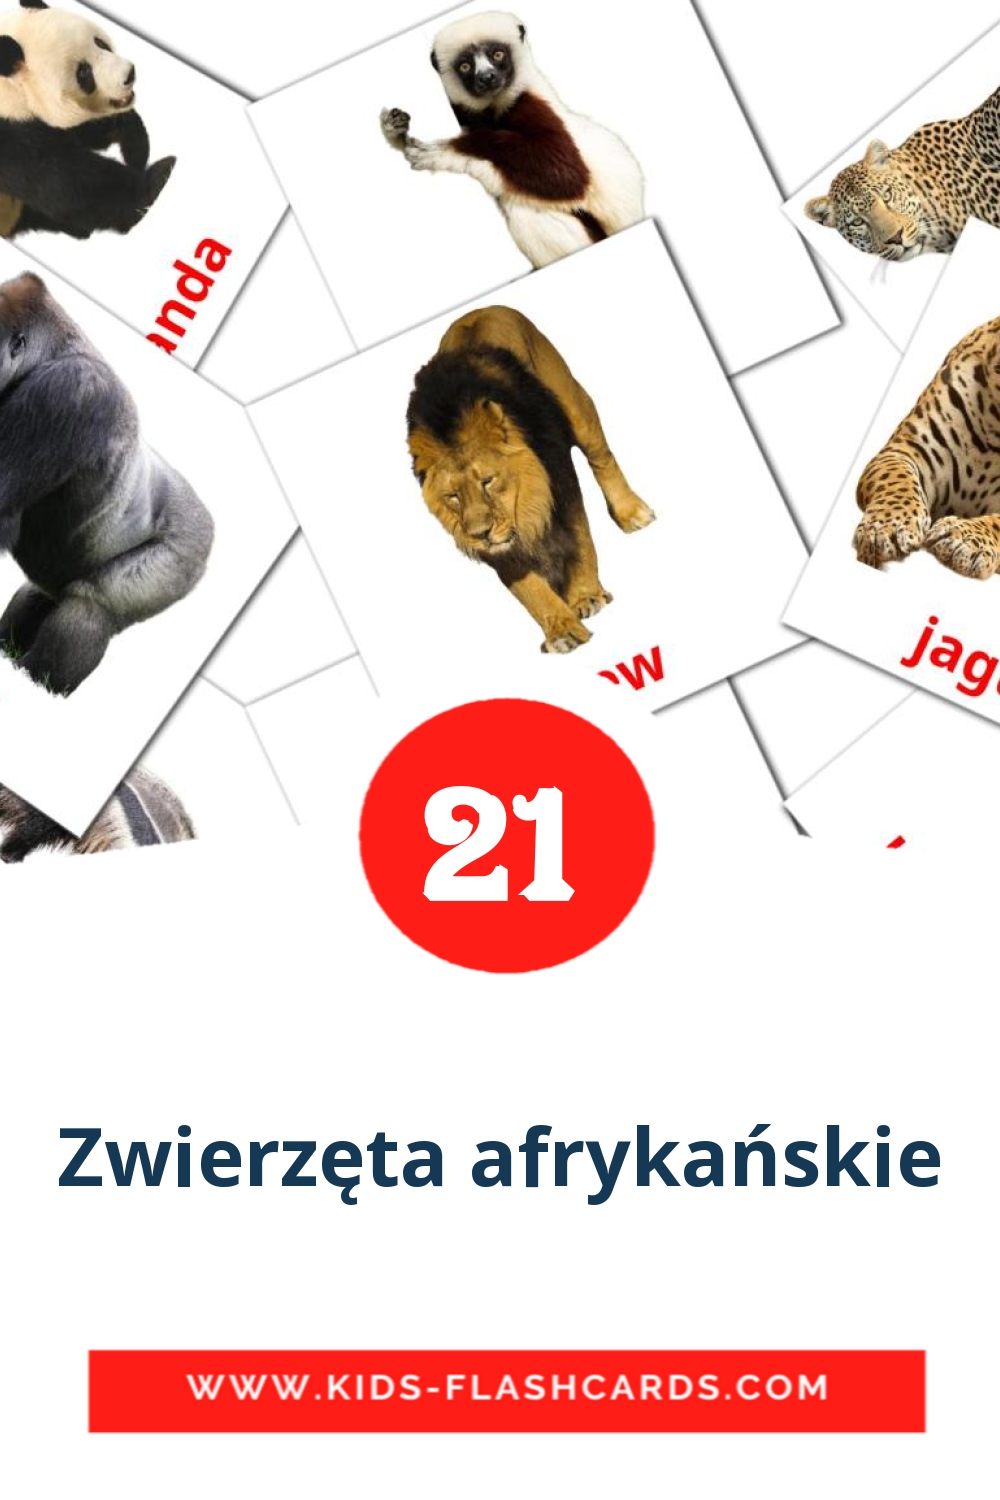 21 carte illustrate di Zwierzęta afrykańskie per la scuola materna in polacco